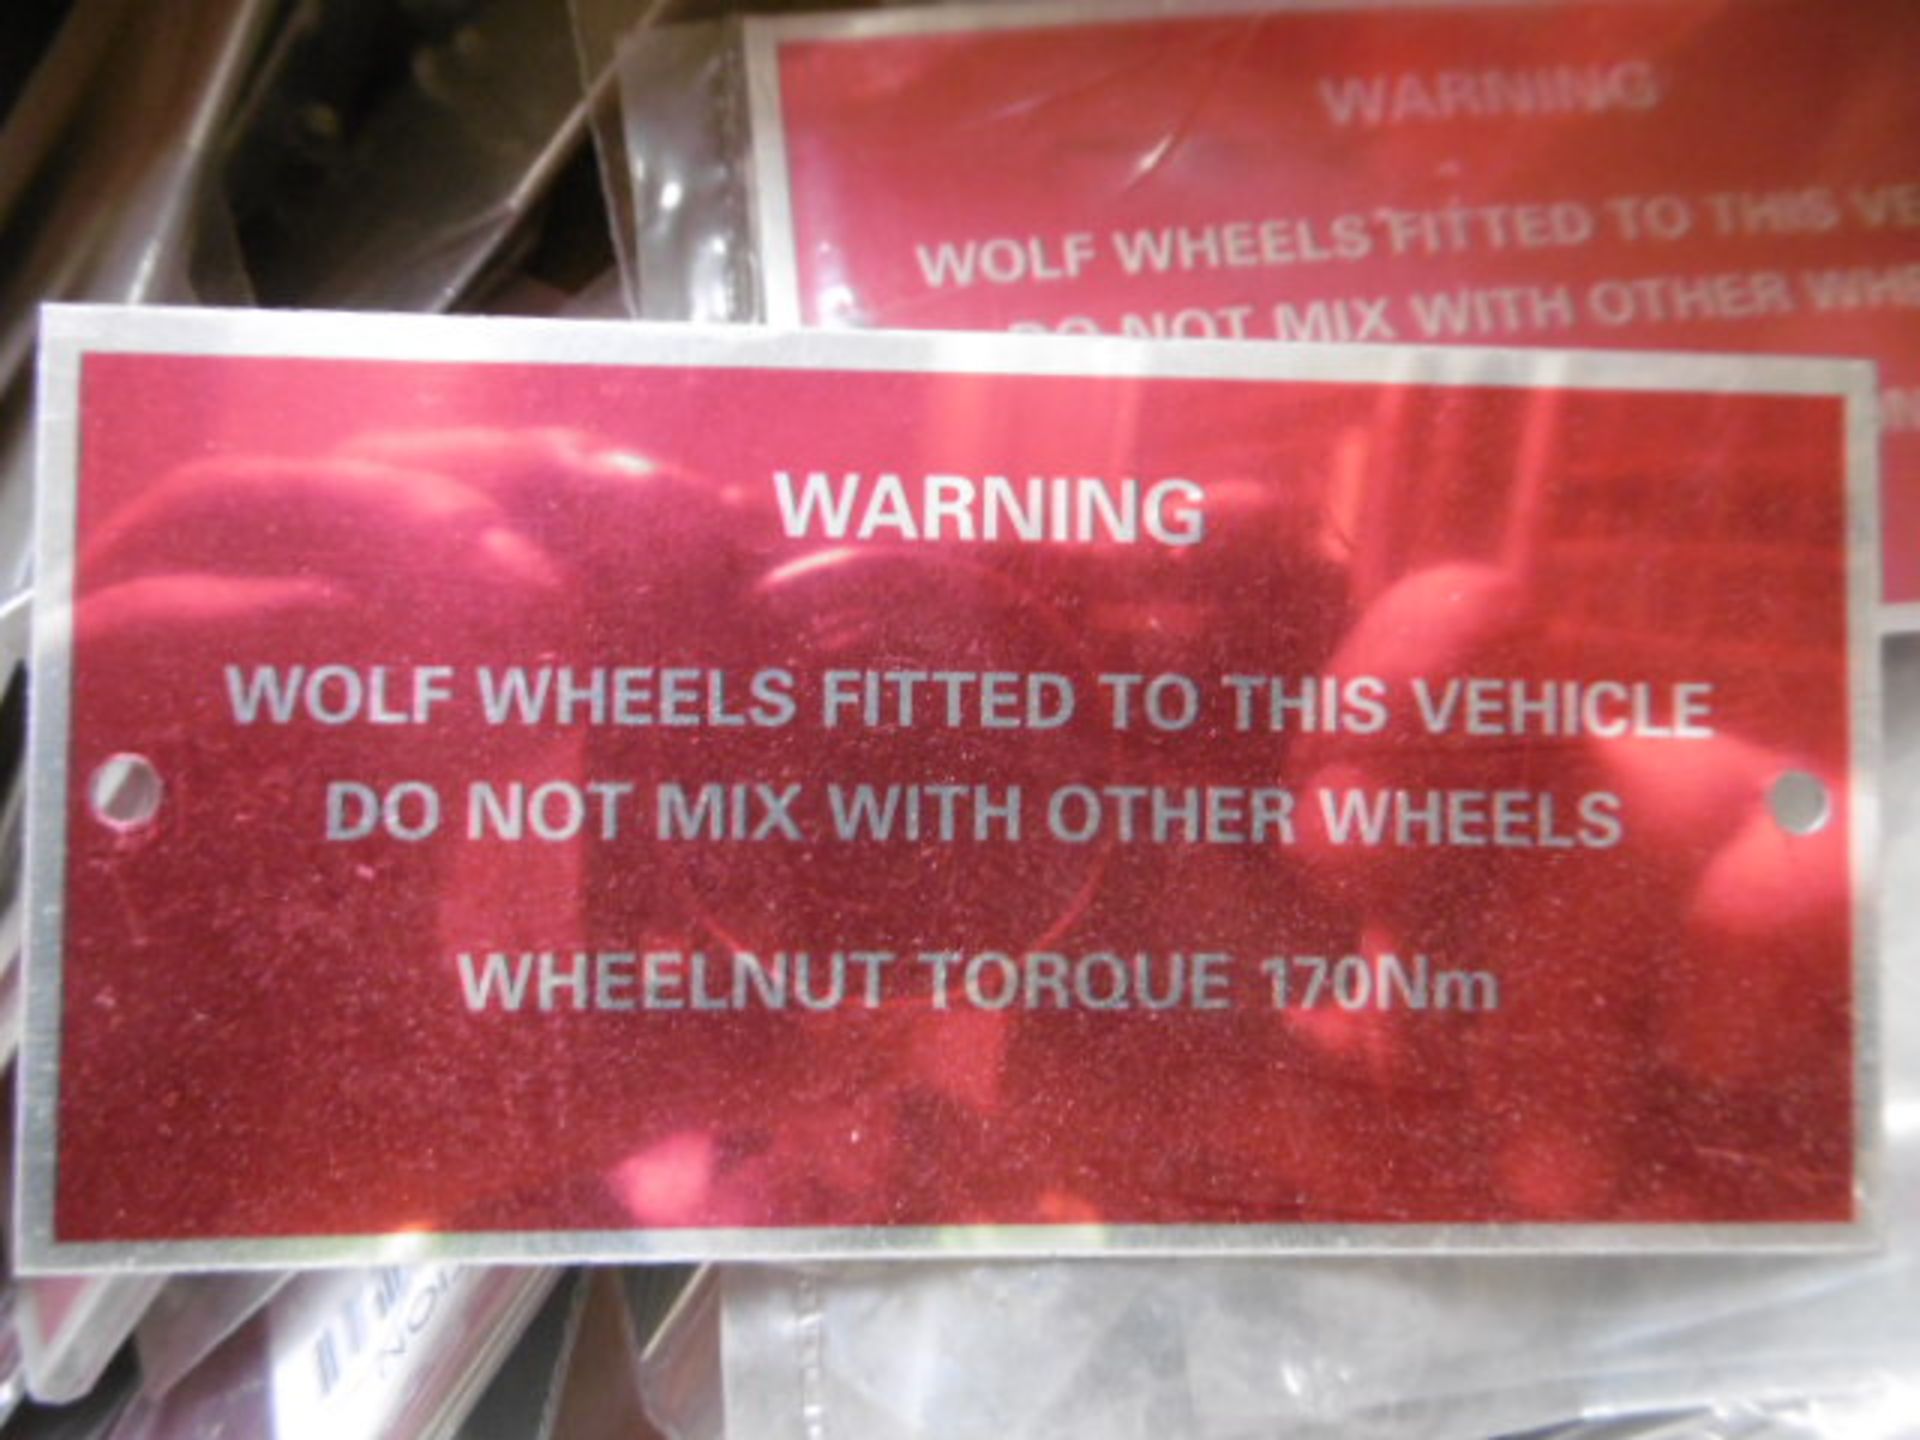 50 x Very Rare British Army Land Rover Defender 90/110 Tithonus Wolf Wheel Warning Plates - Image 2 of 4